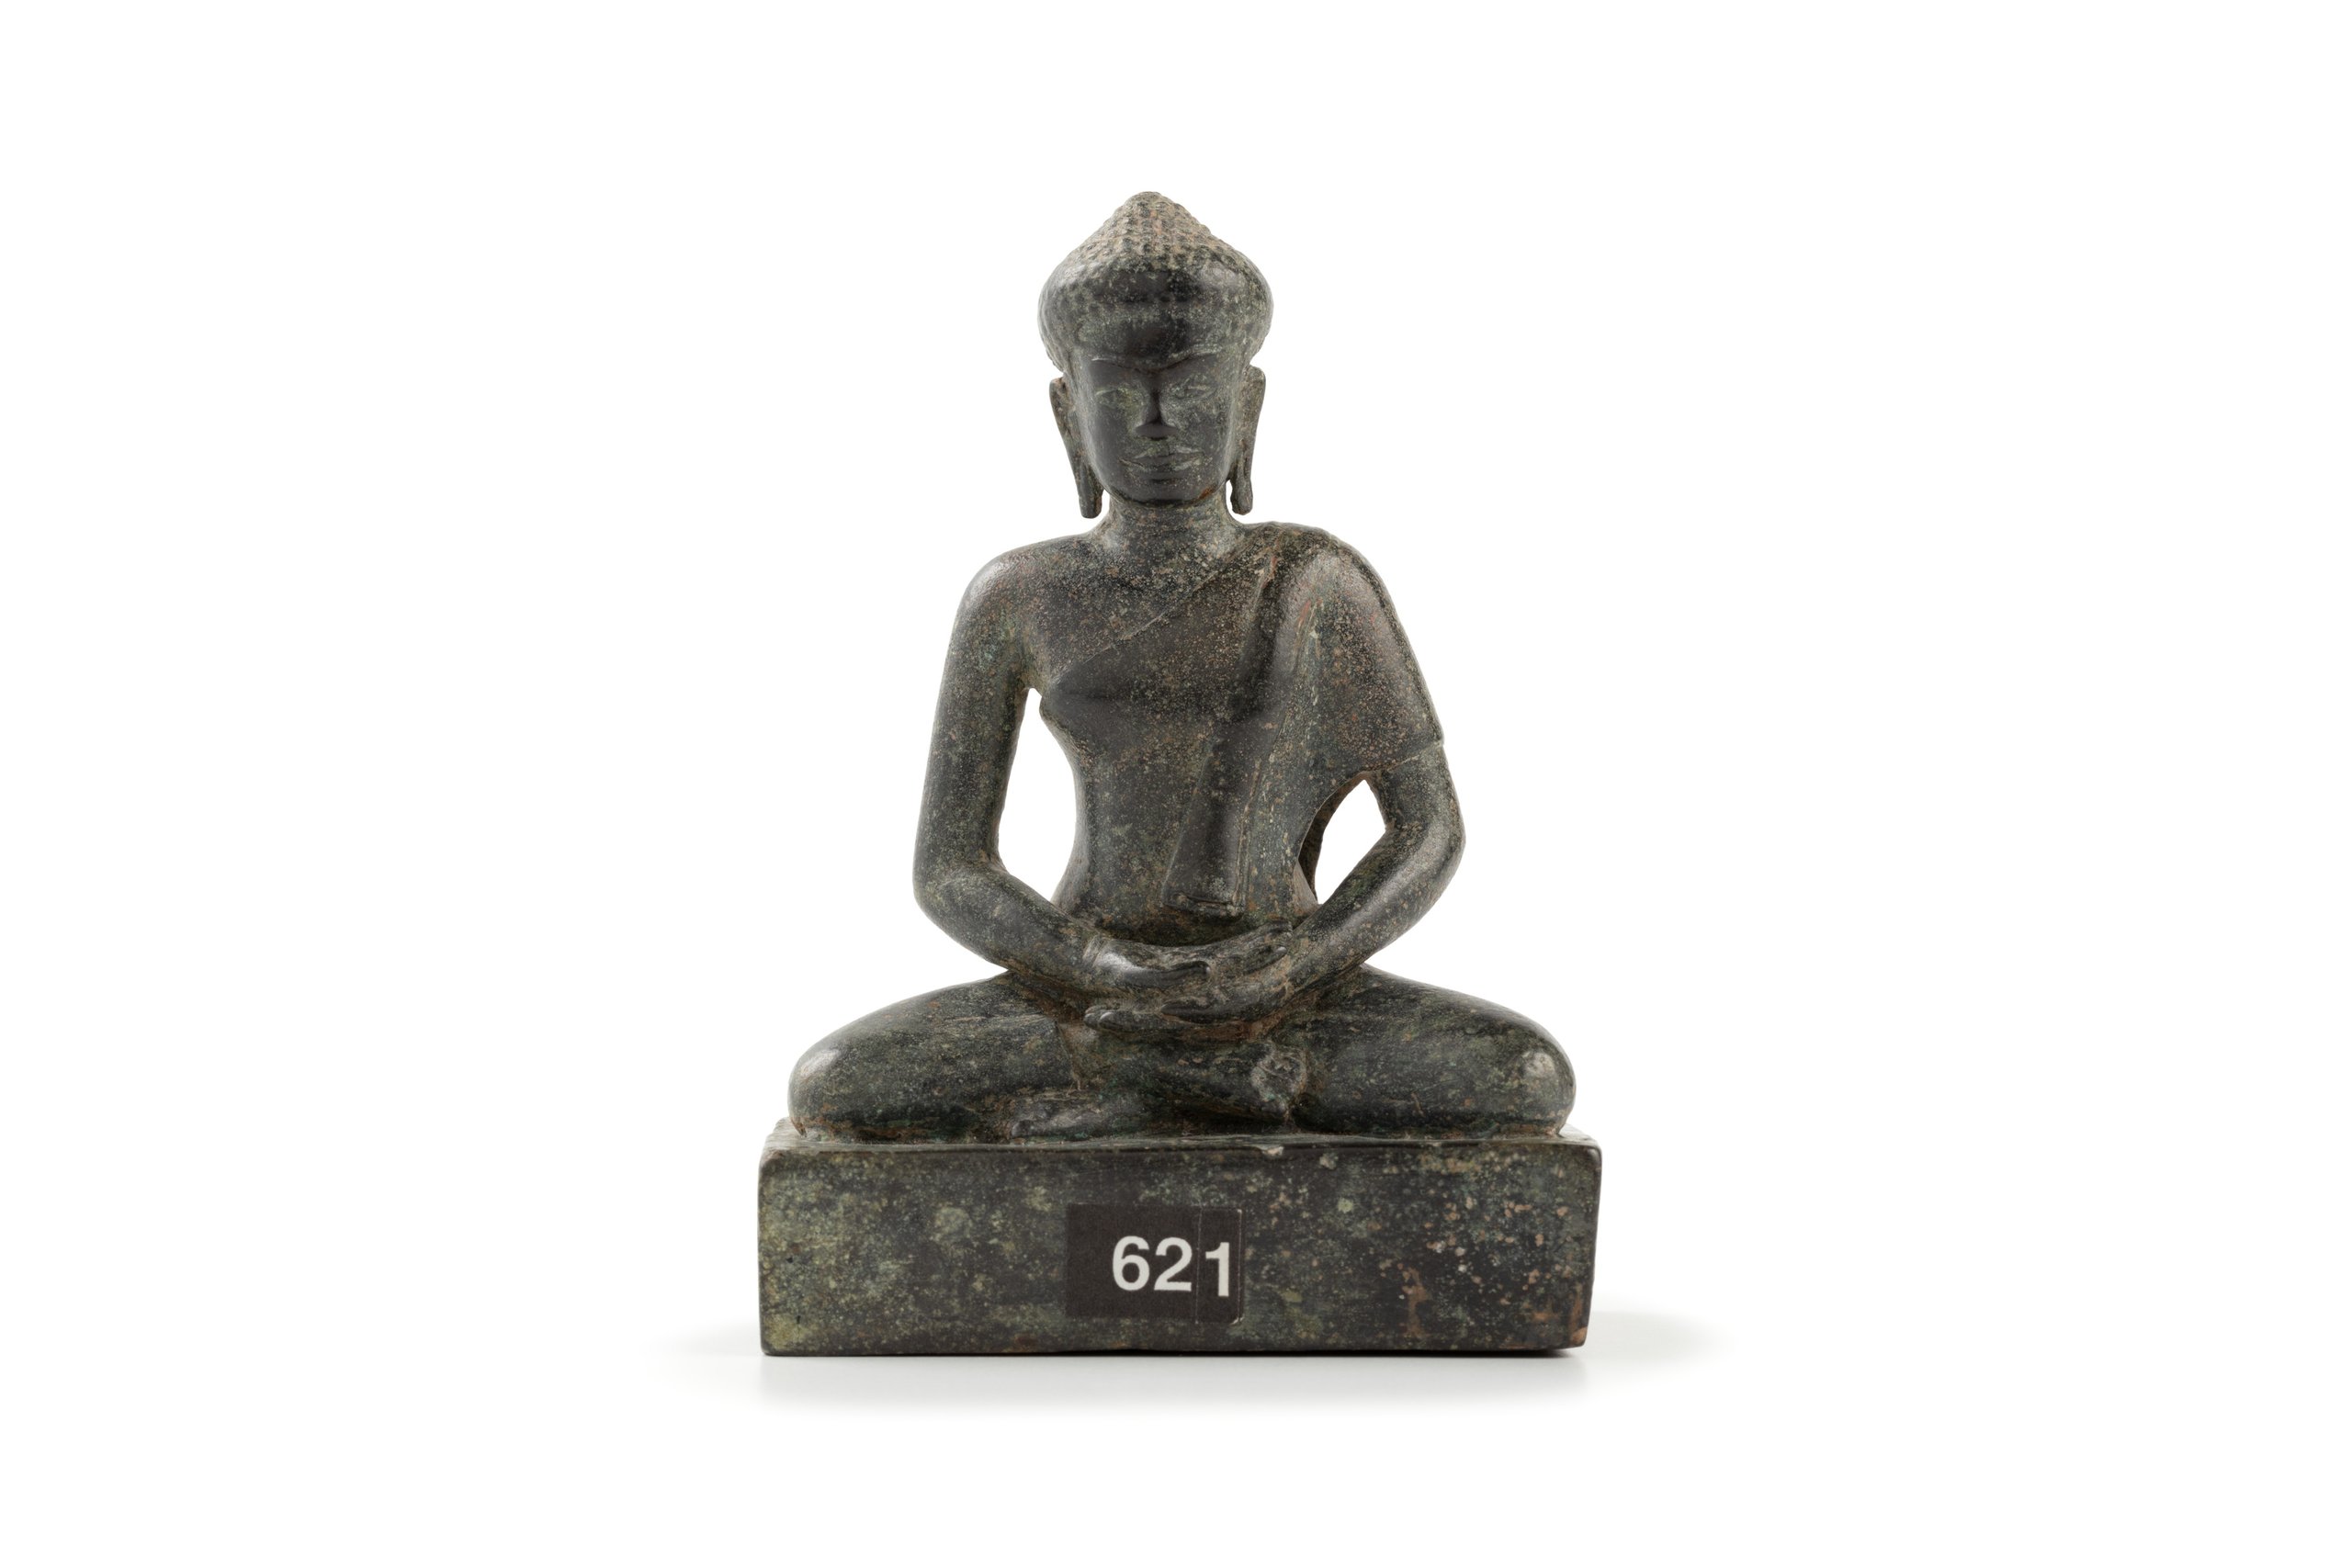 Seated Buddha figure from Cambodia